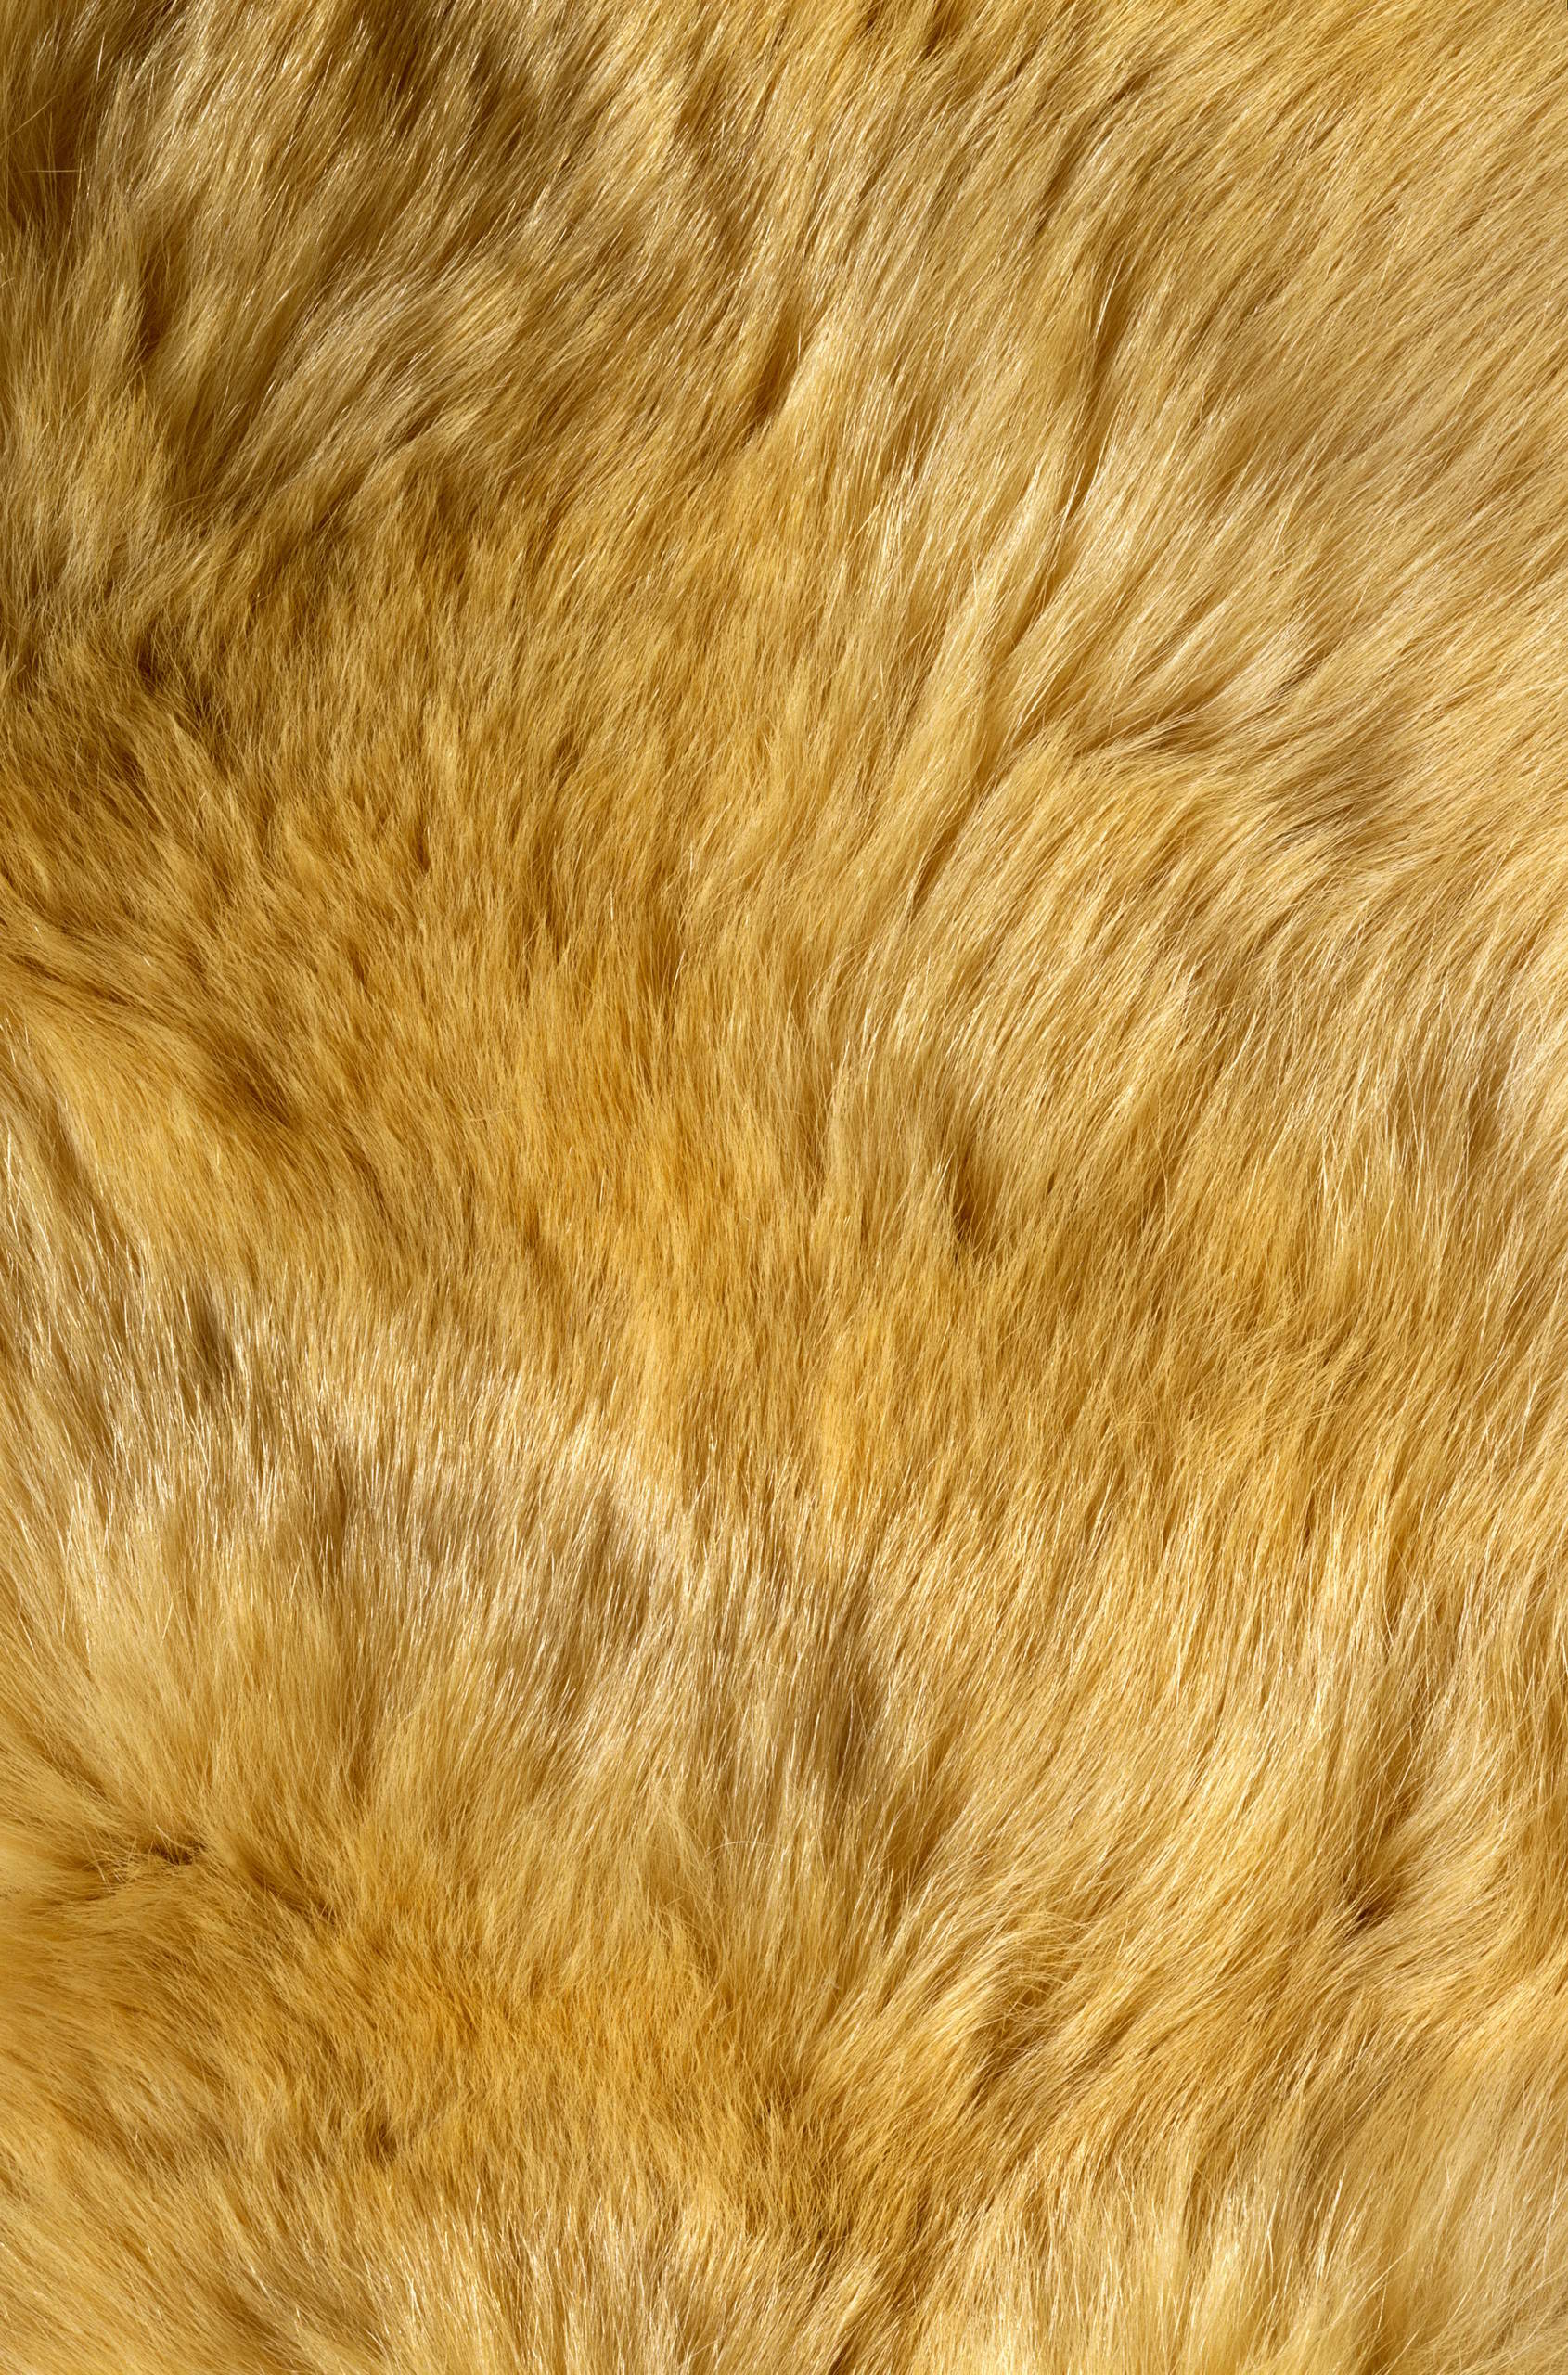  , texture fur, yellow fur texture background, background